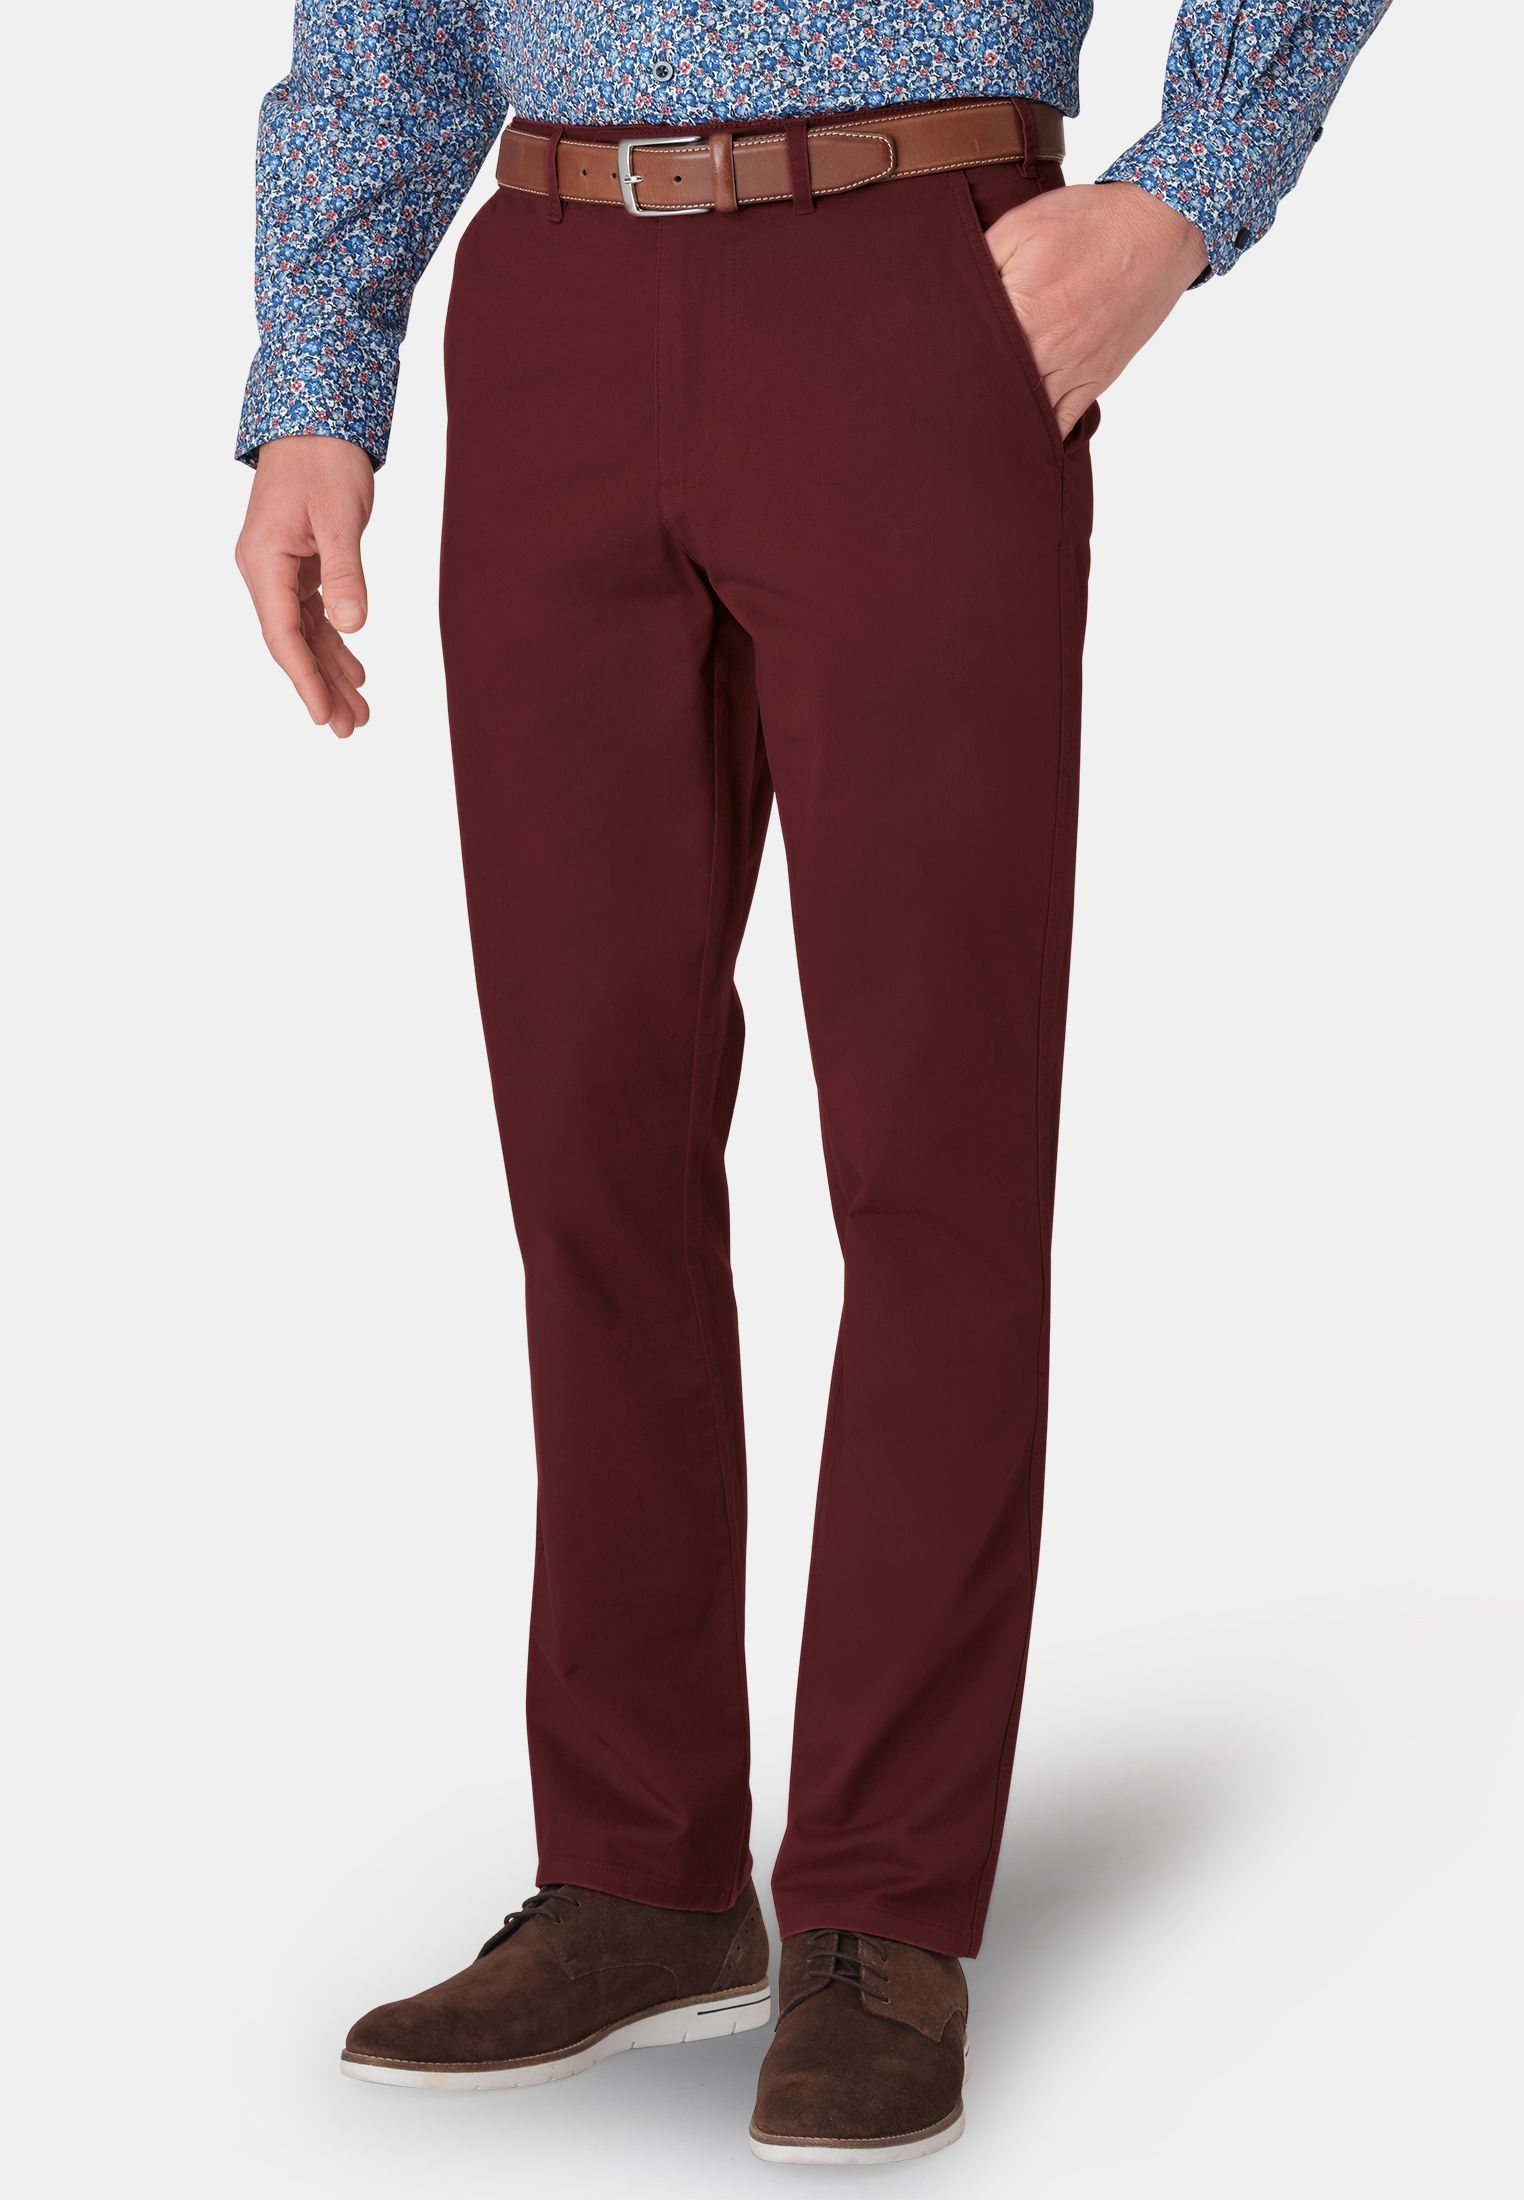 burgundy pants | Nordstrom